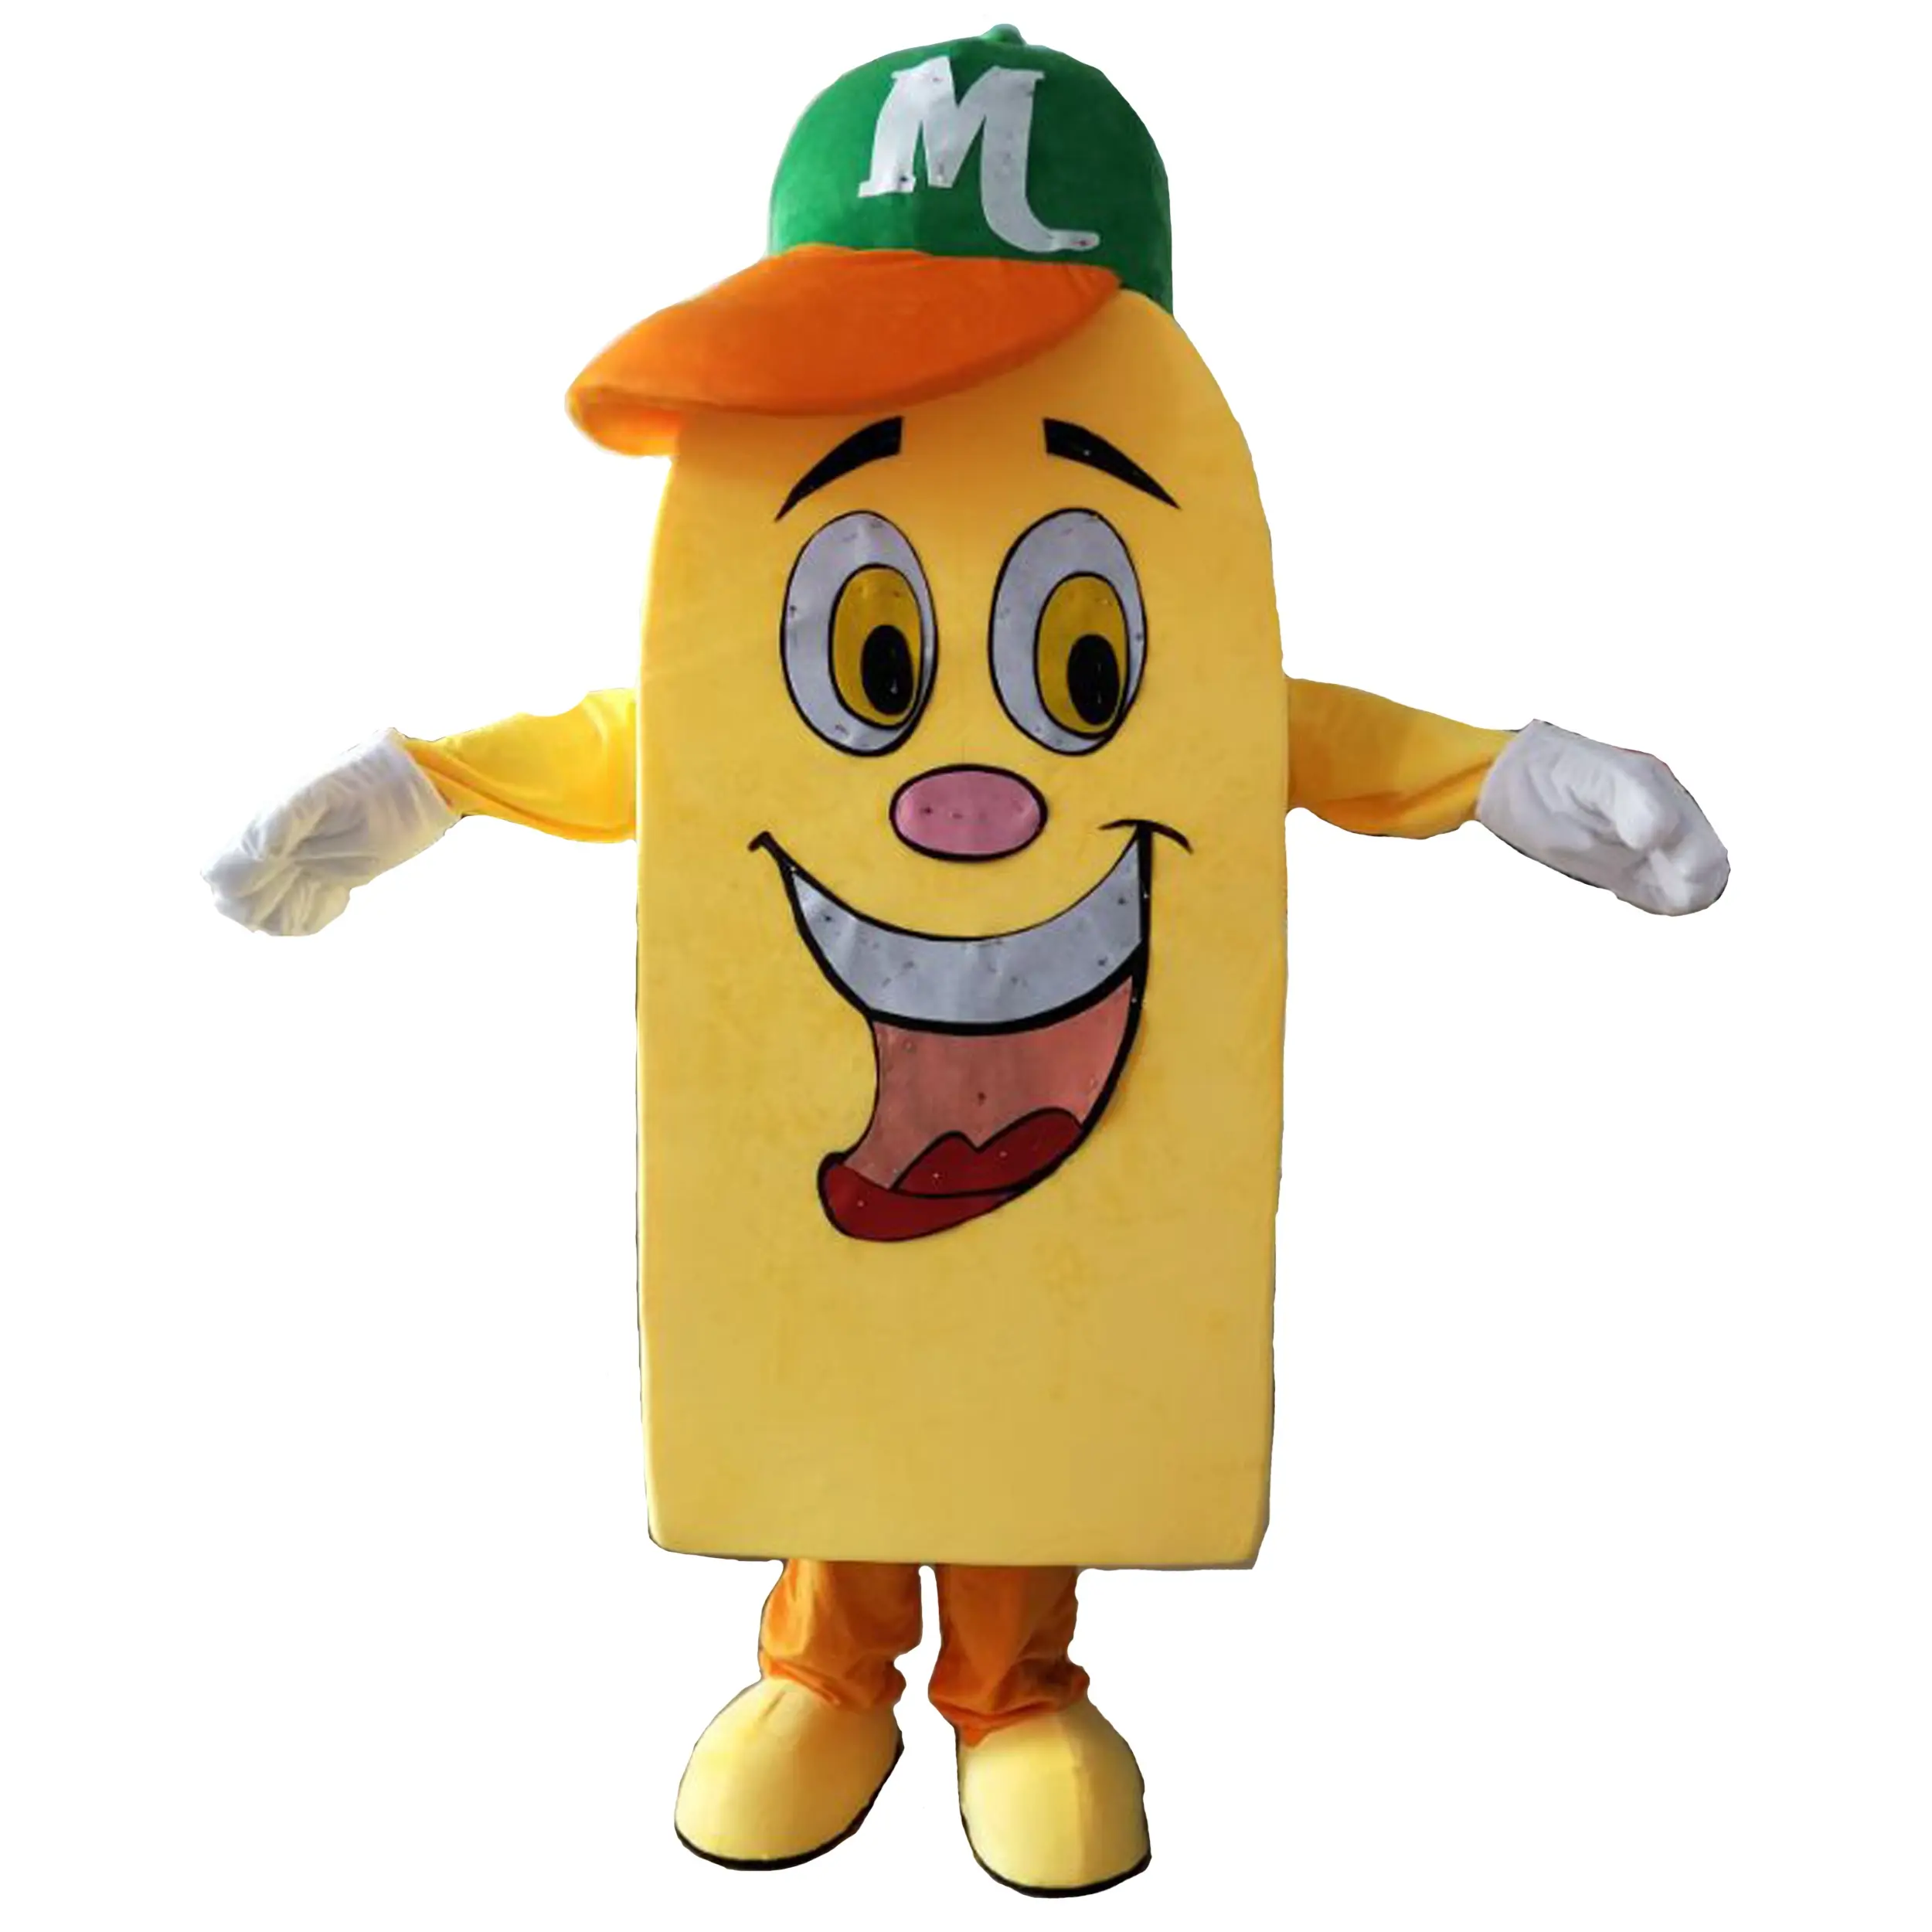 Big body custom yellow popsicle mascot costume for advertising